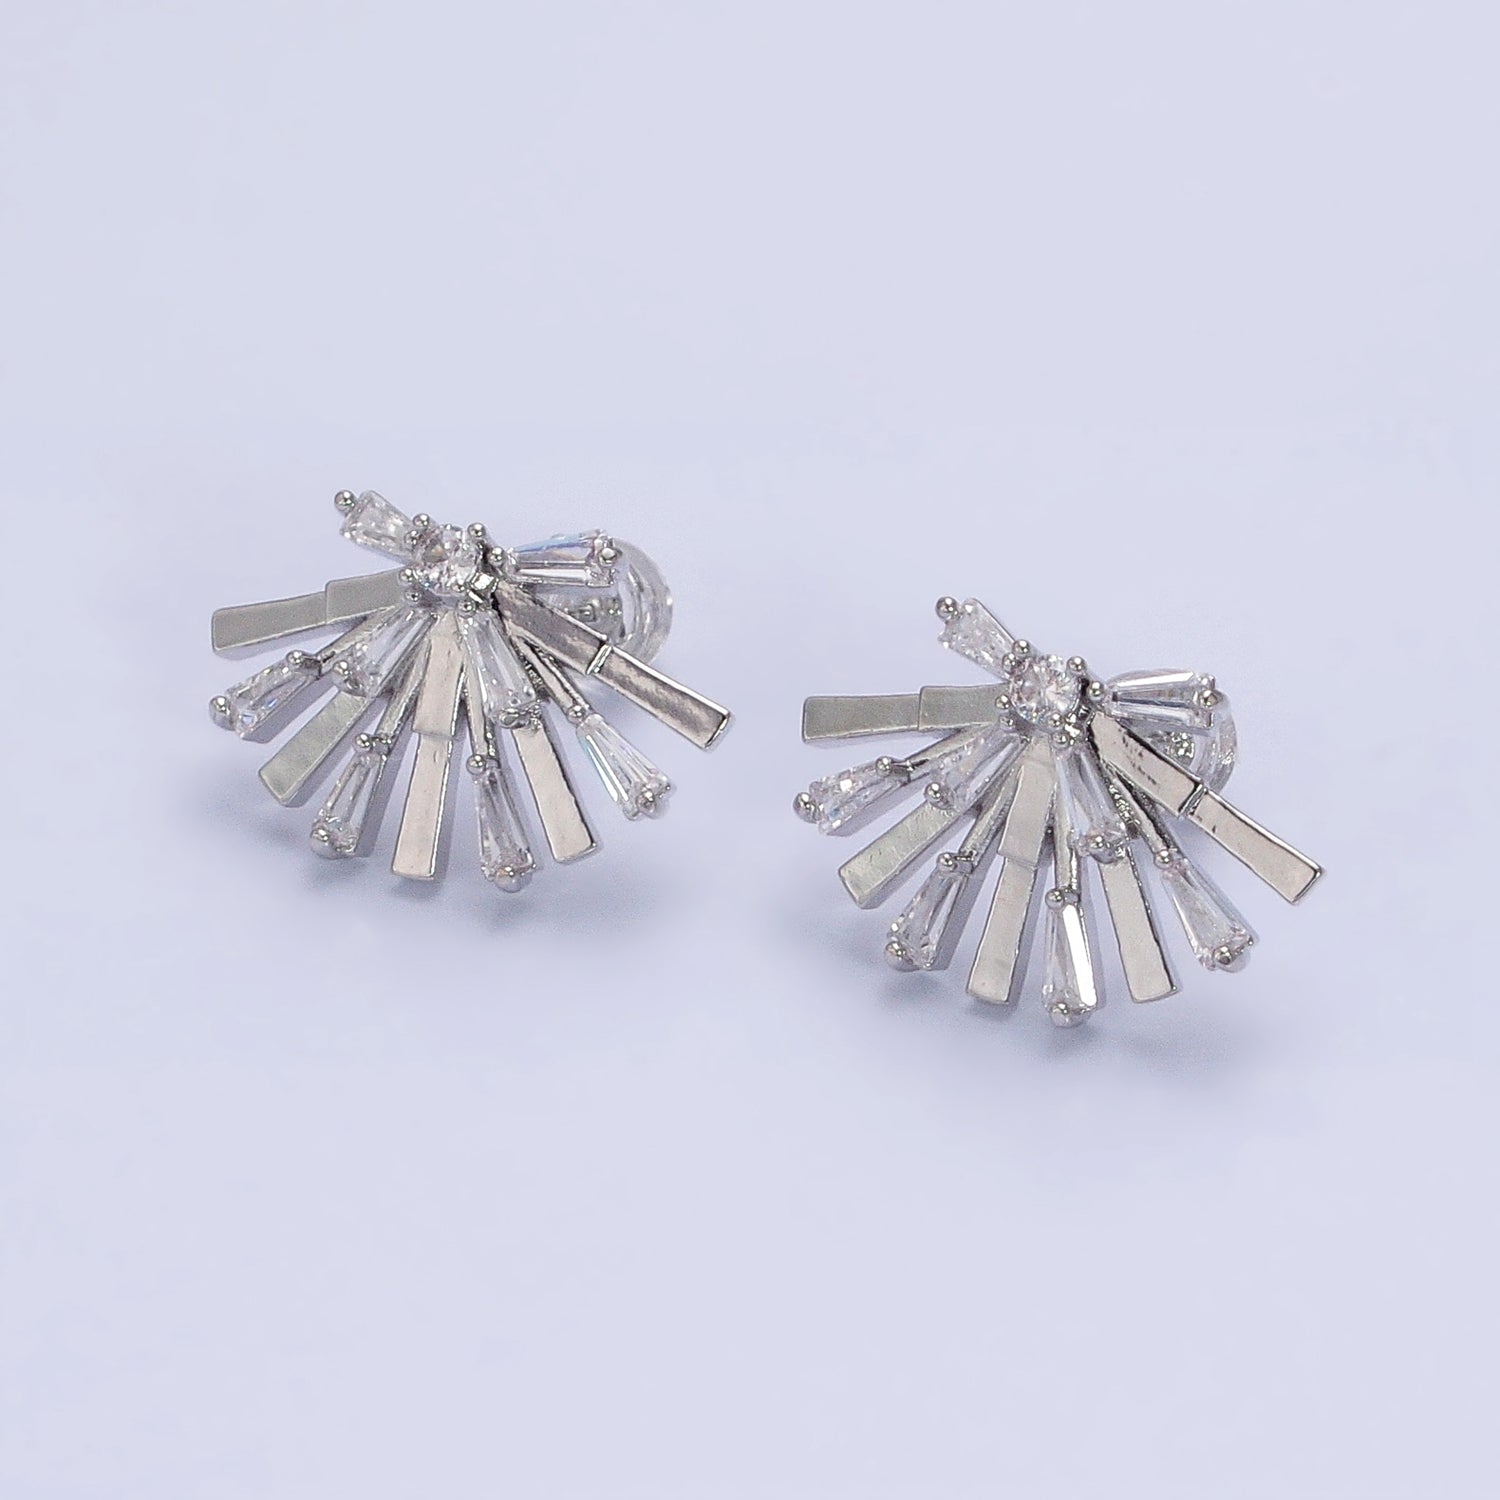 Gold, Silver Rectangular Clear CZ Baguette Geometric Fan Stud Earrings | AB635 AB636